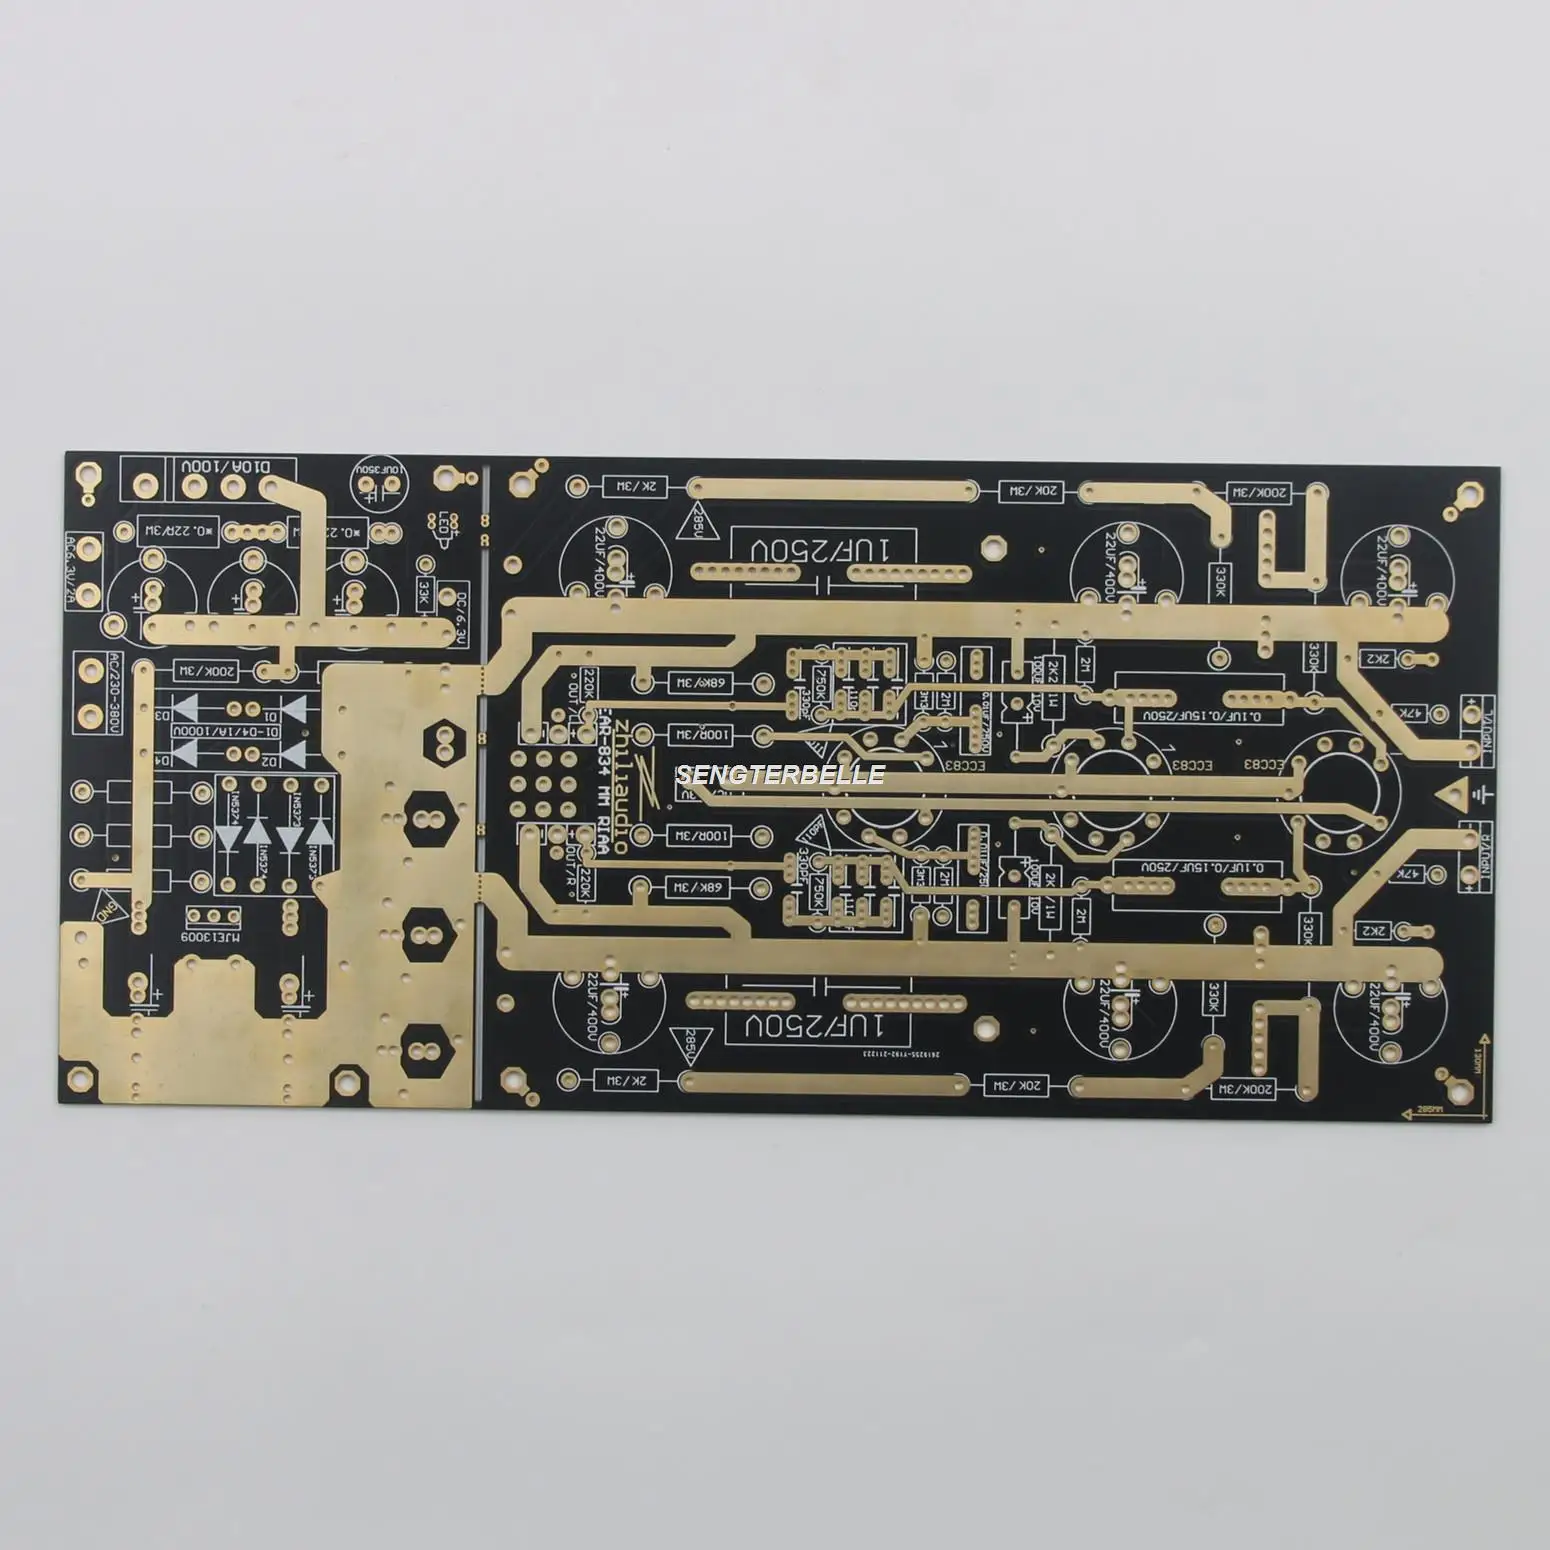 

HiFi MM RIAA Stereo Phono Gold-Plate PCB Turntables Ear834 Tube Amplifier Bare Board